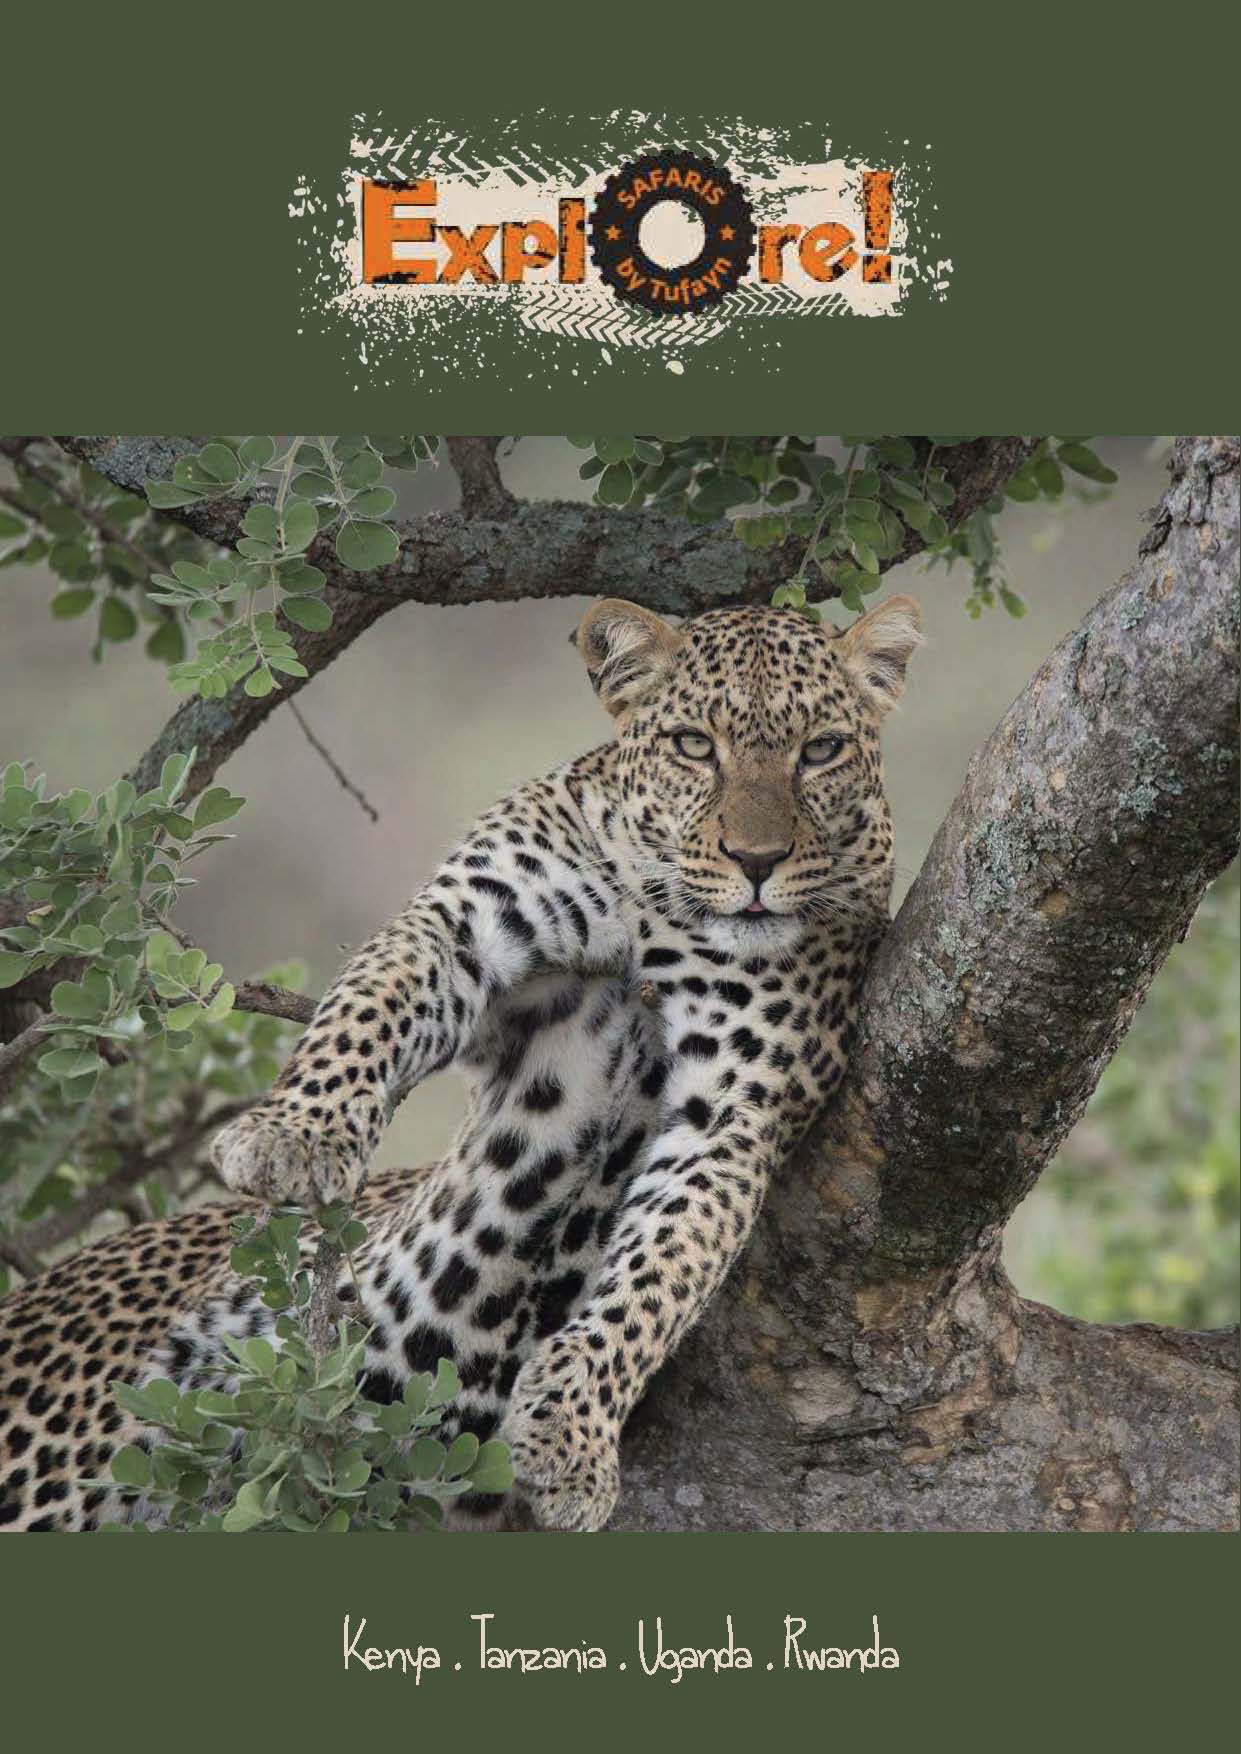 Explore-Safaris-Brochure-Final-Work-10th-Nov-2119-hrs_compressed_Page_01